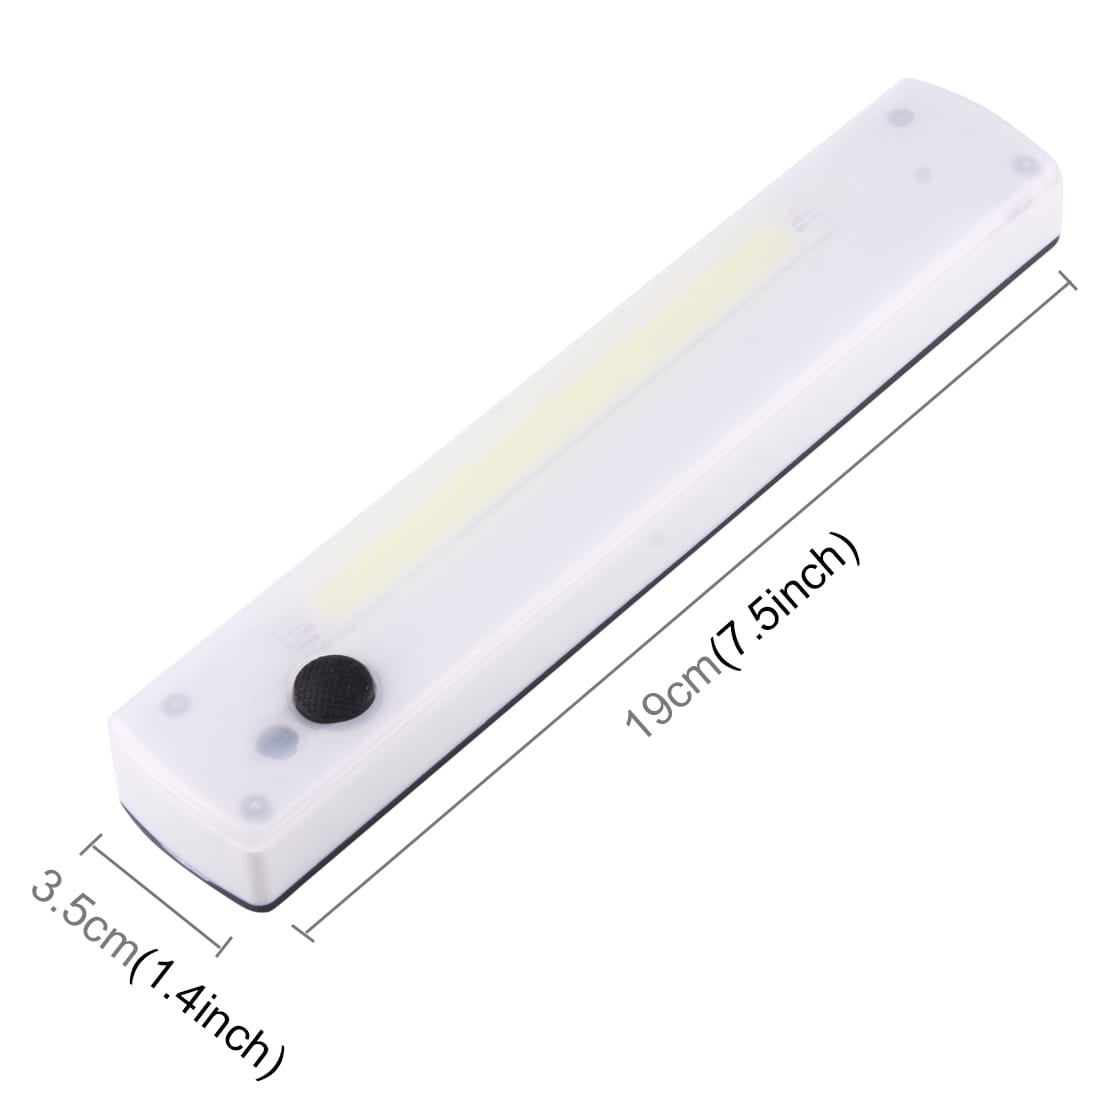 LED garderobslampa / nattlampa med magnet